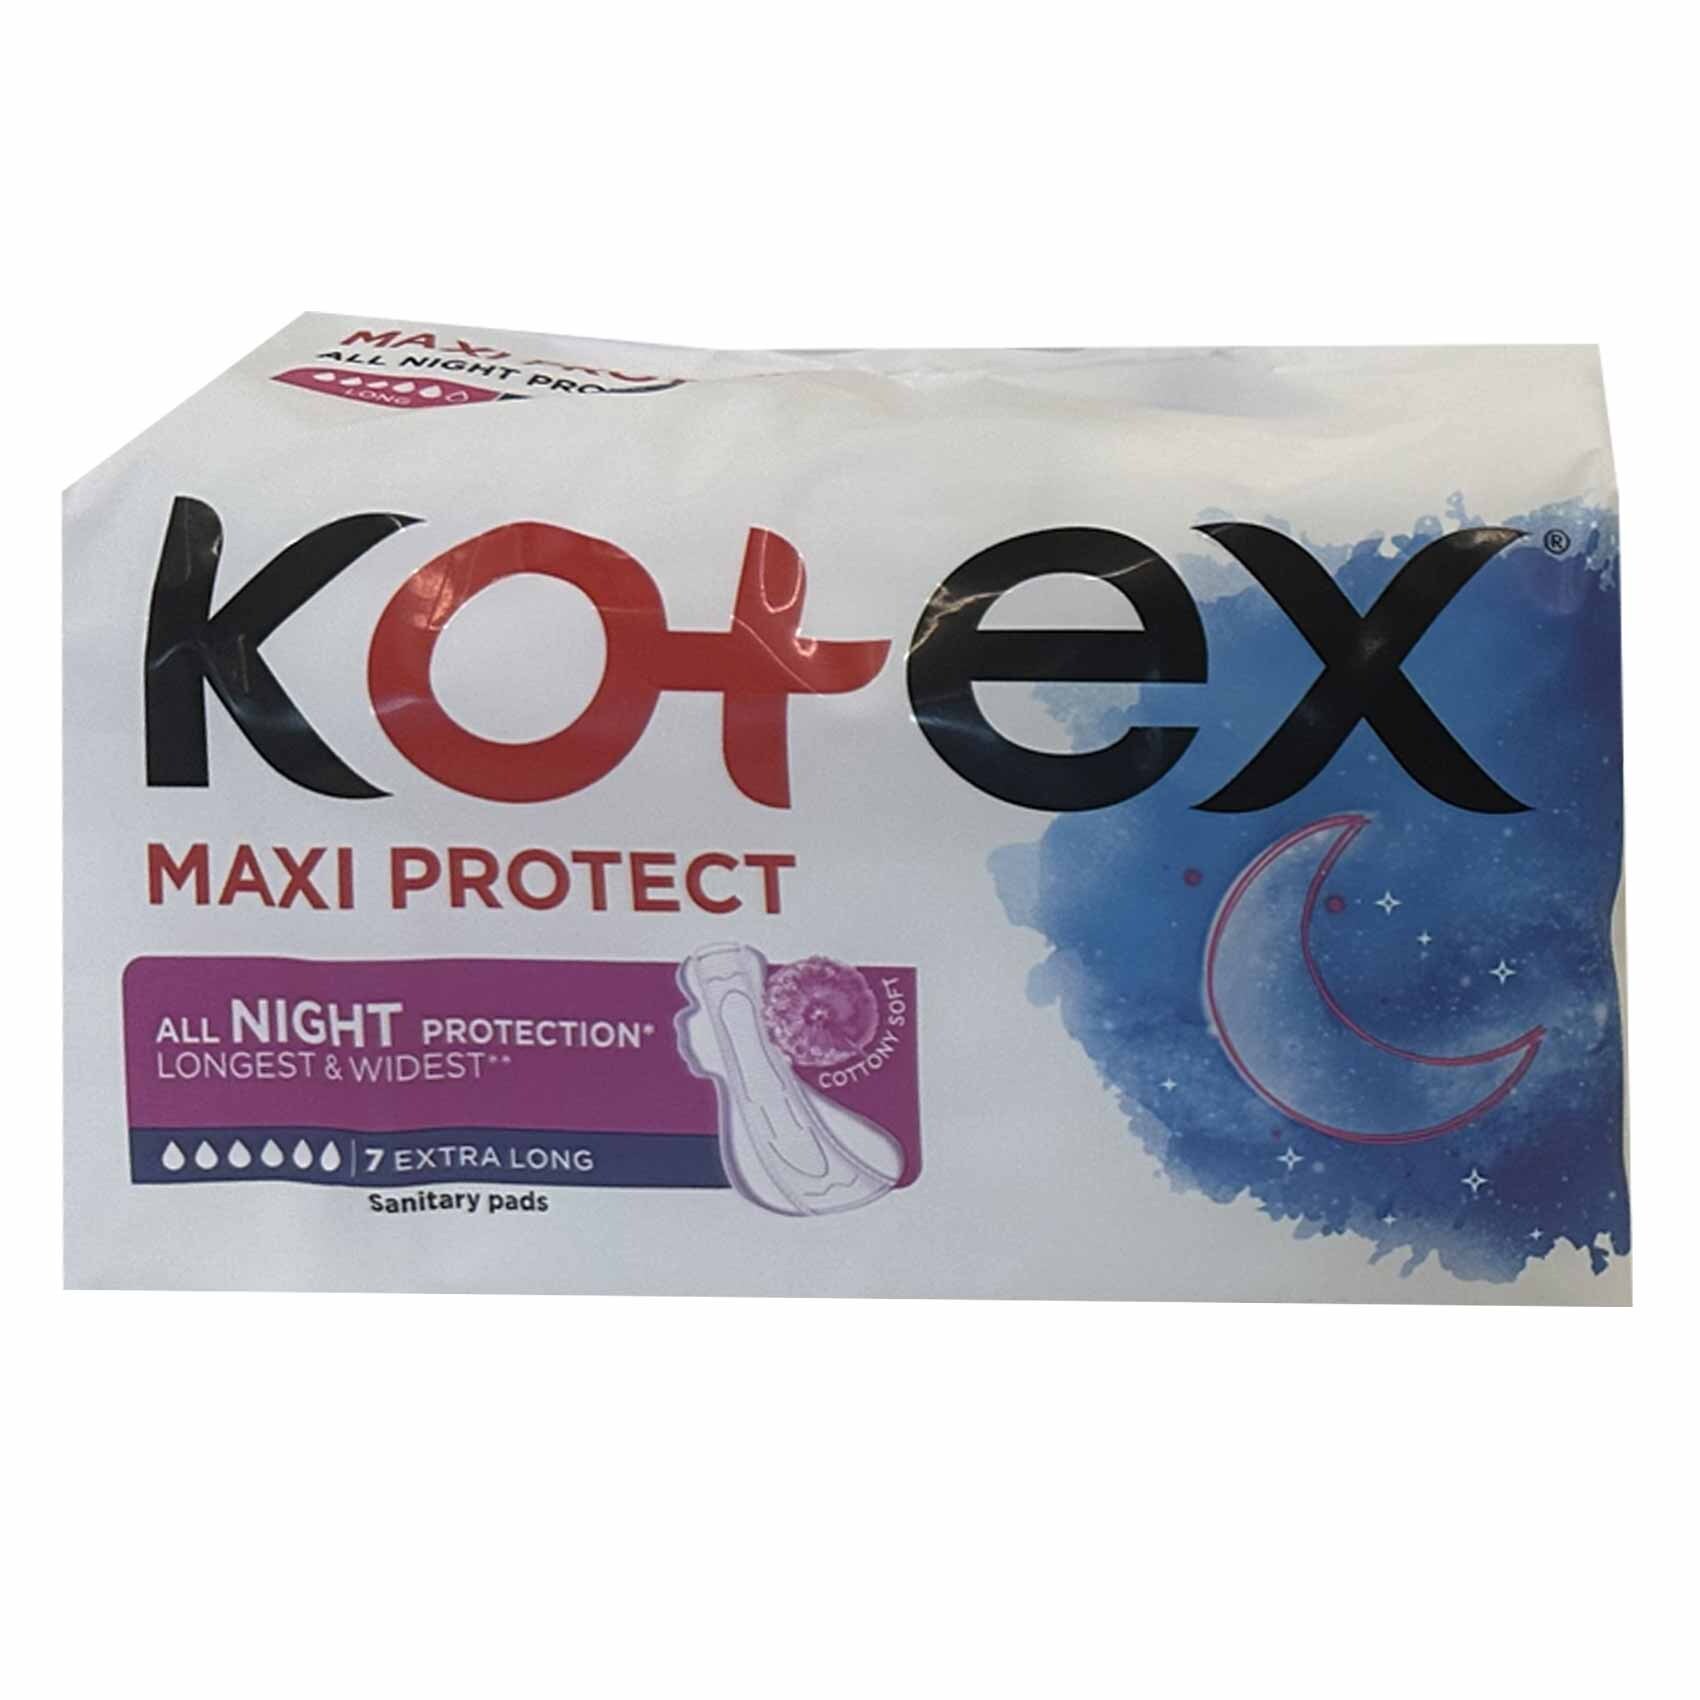 Shop Kotex Sanitary Pads Online - Carrefour